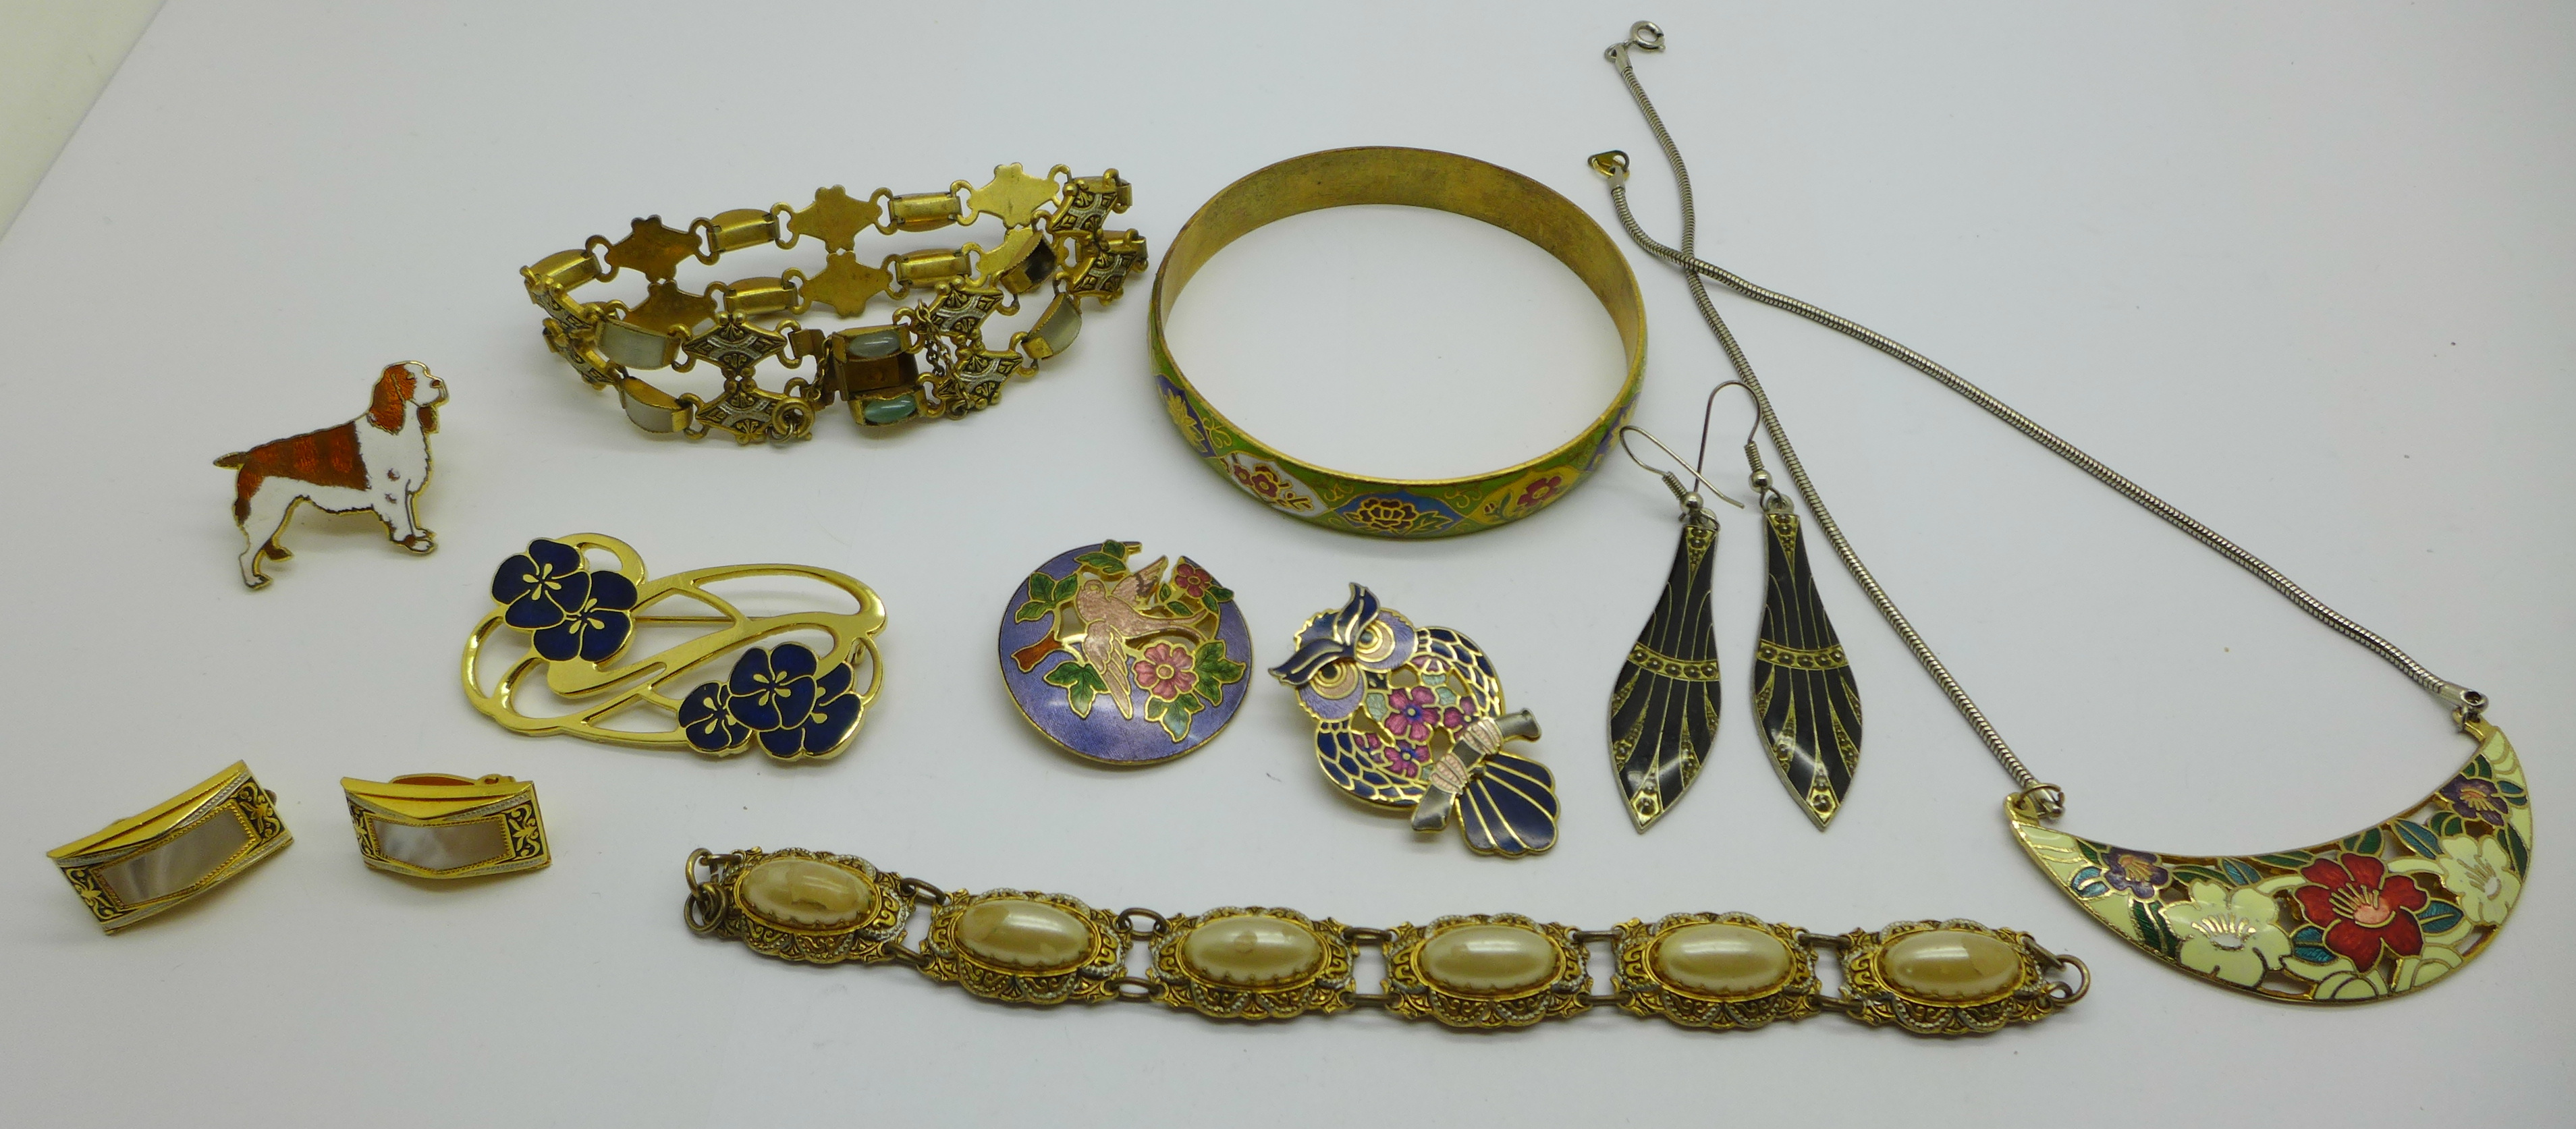 Cloisonne and Toledo jewellery